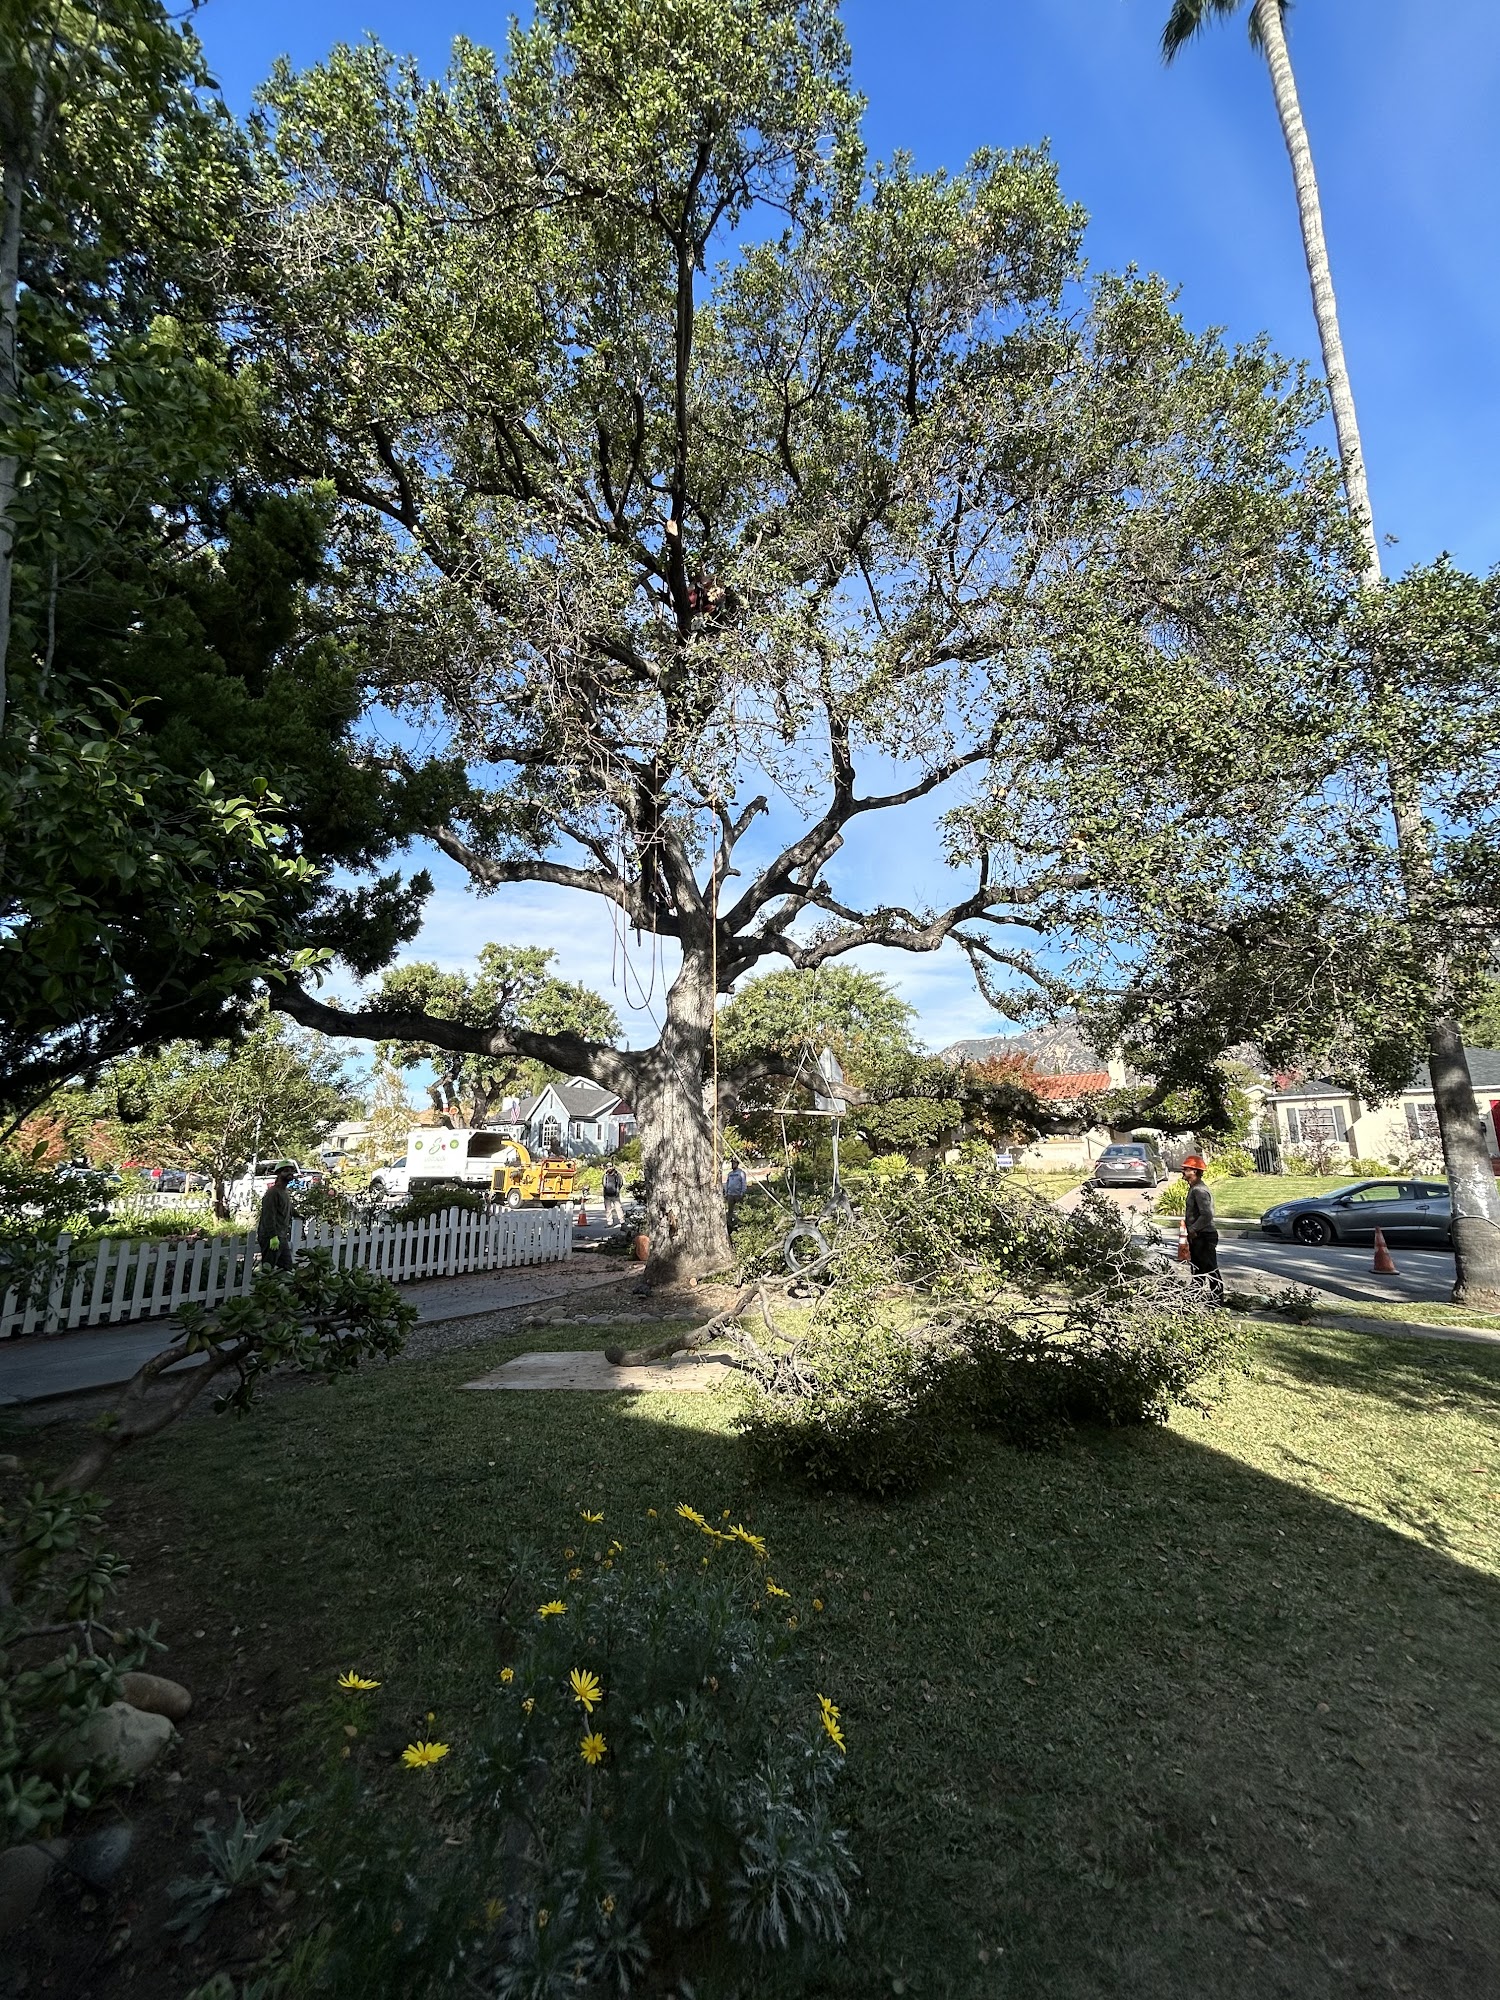 Santiago's Landscape & Tree Services 2233 N Casitas Ave, Altadena California 91001